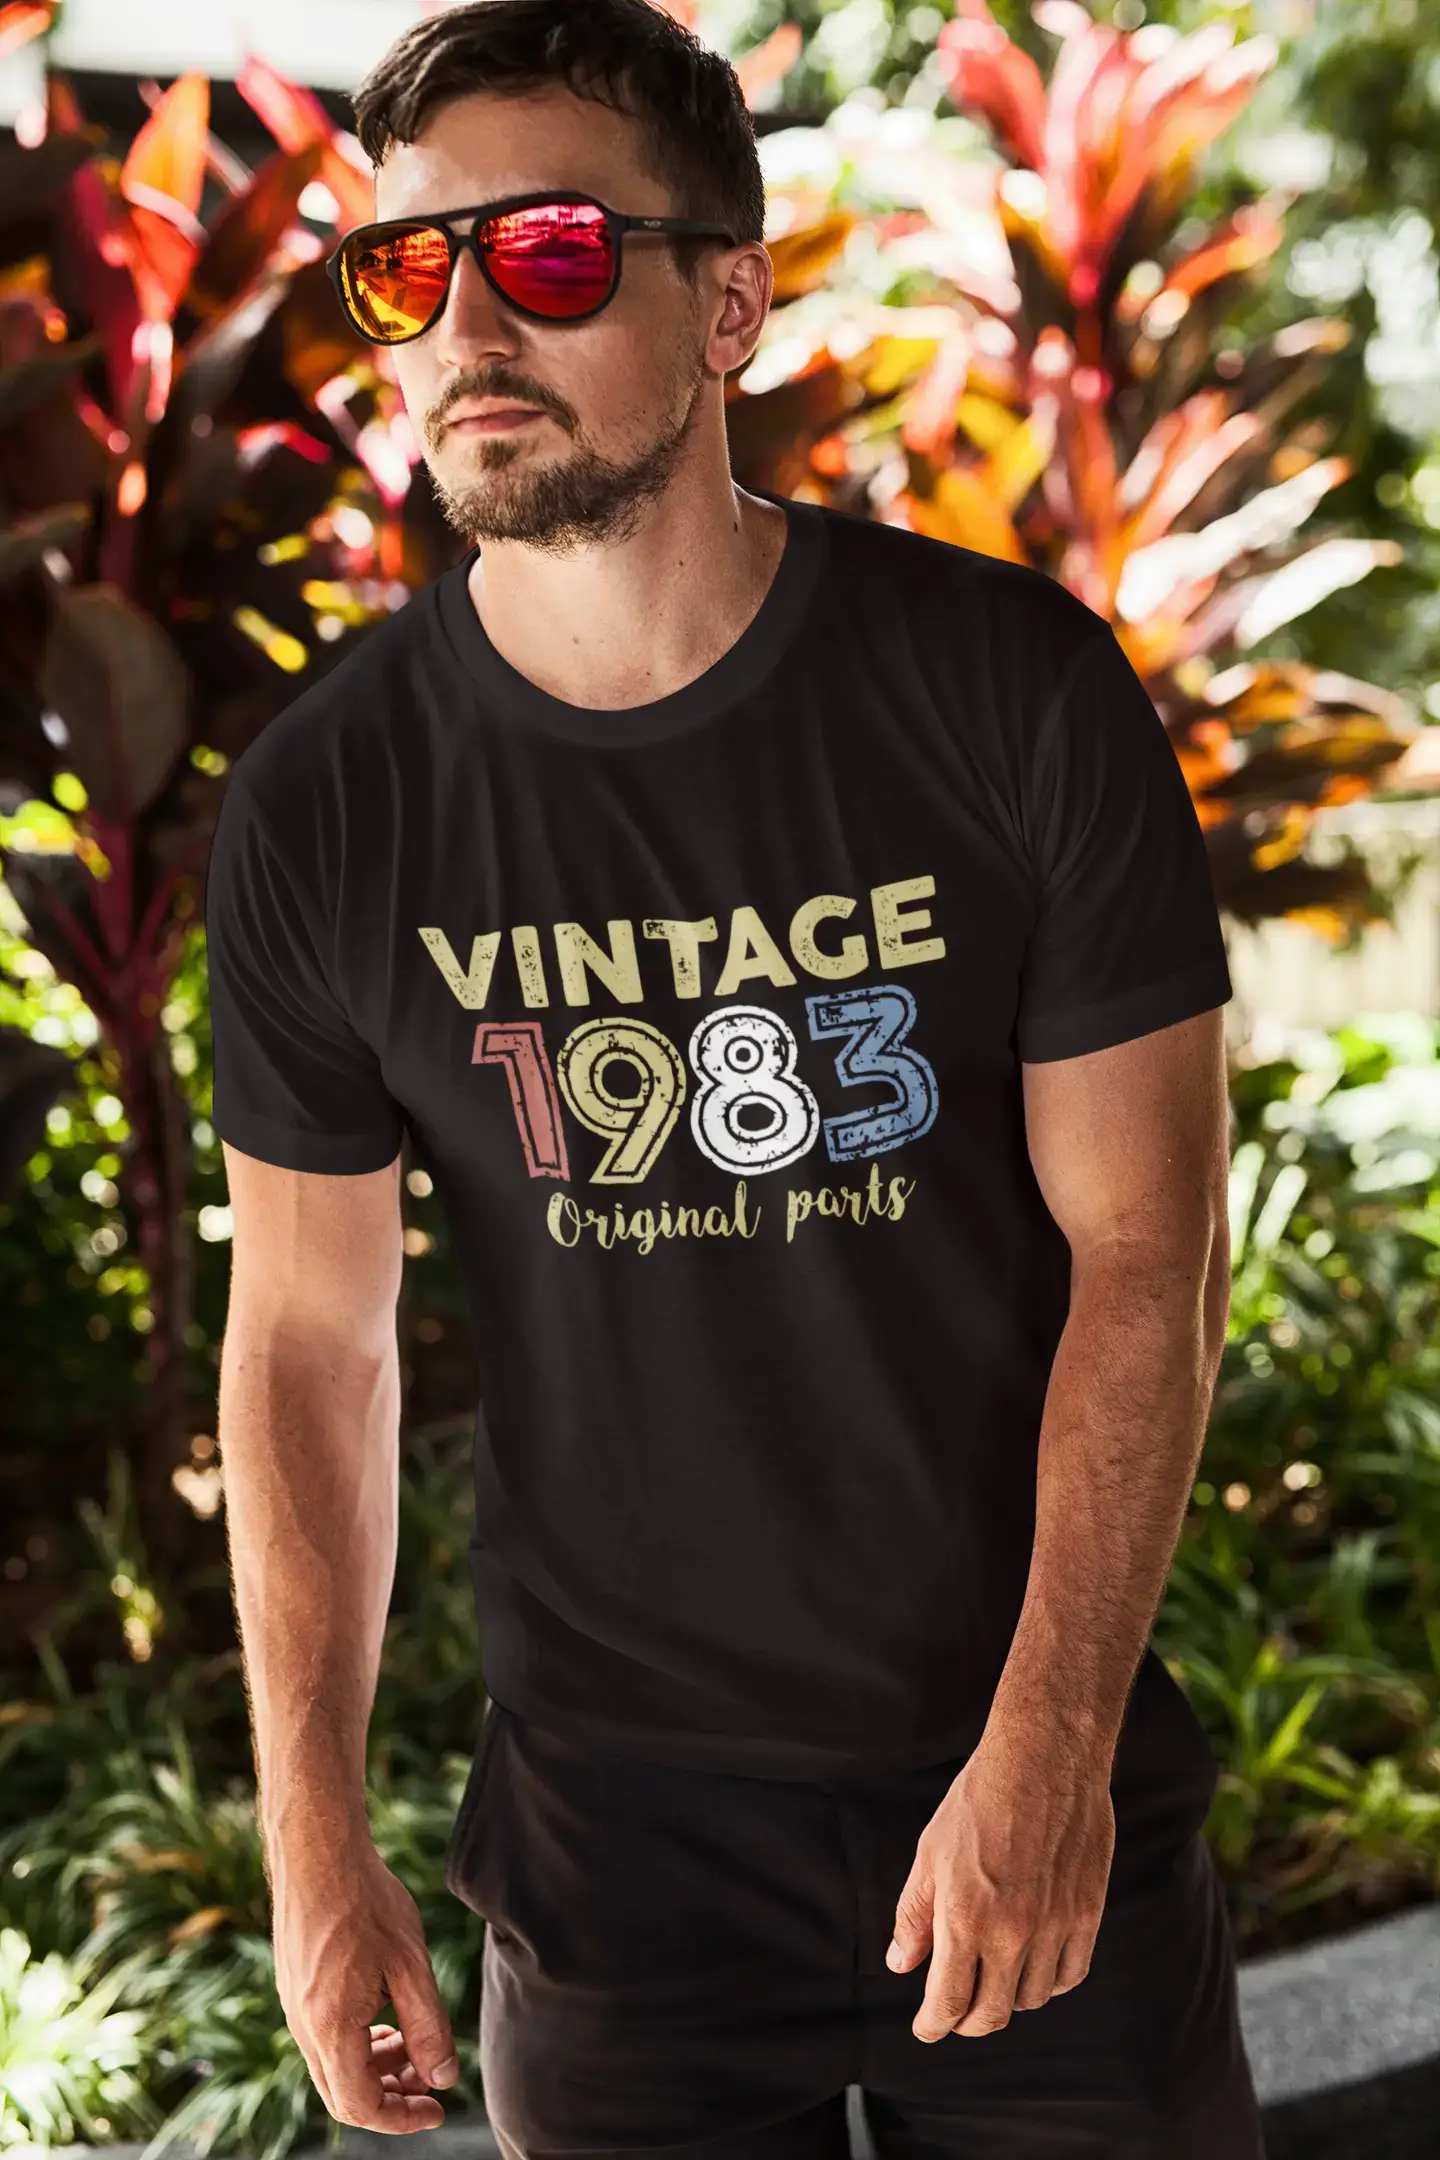 ULTRABASIC - Graphic Printed Men's Vintage 1983 T-Shirt Denim